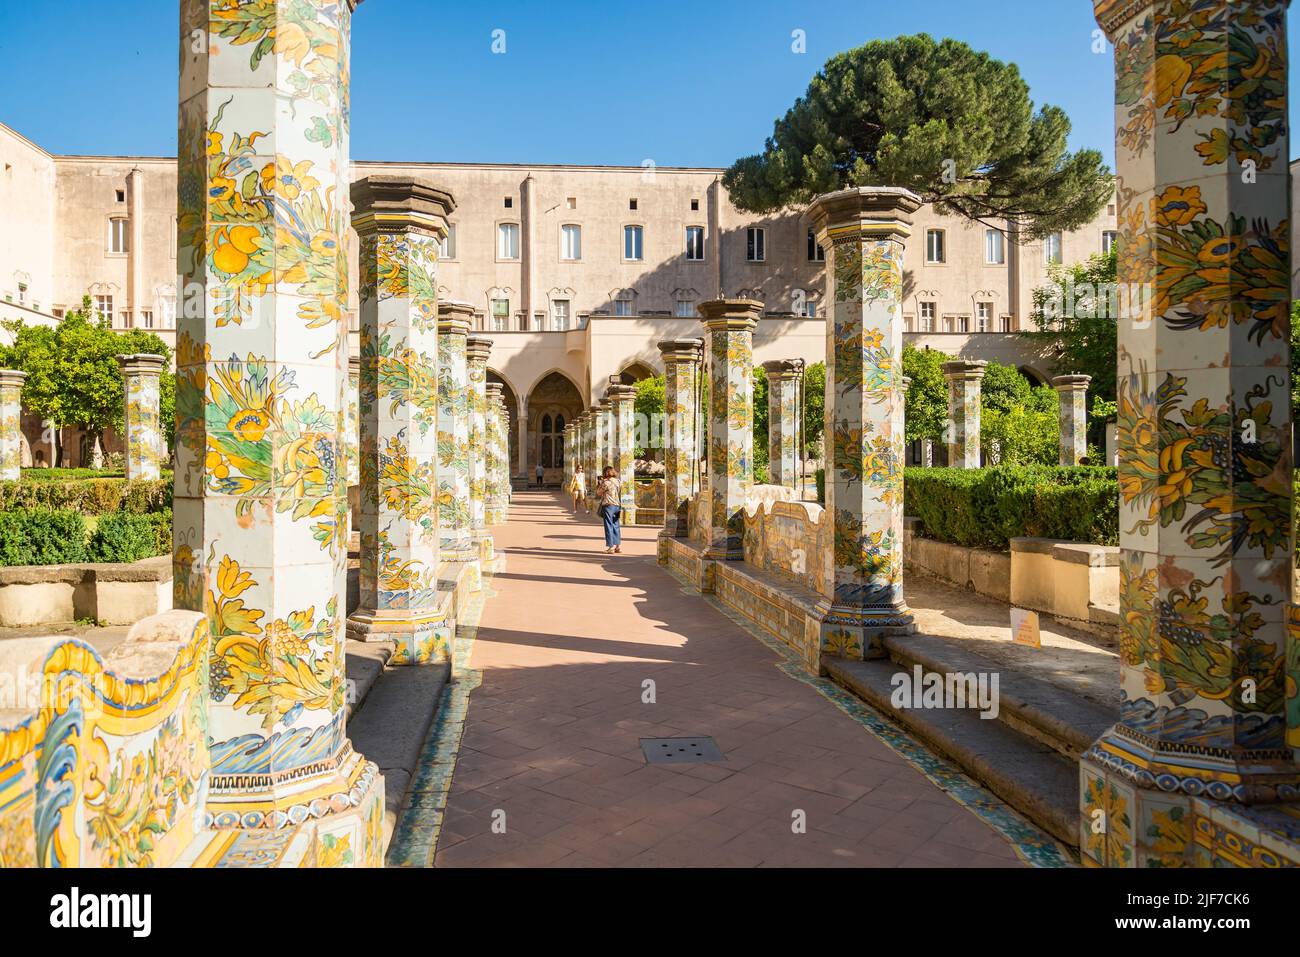 Cloister architecture of the Santa Chiara Monastery in Naples City, Italy Stock Photo